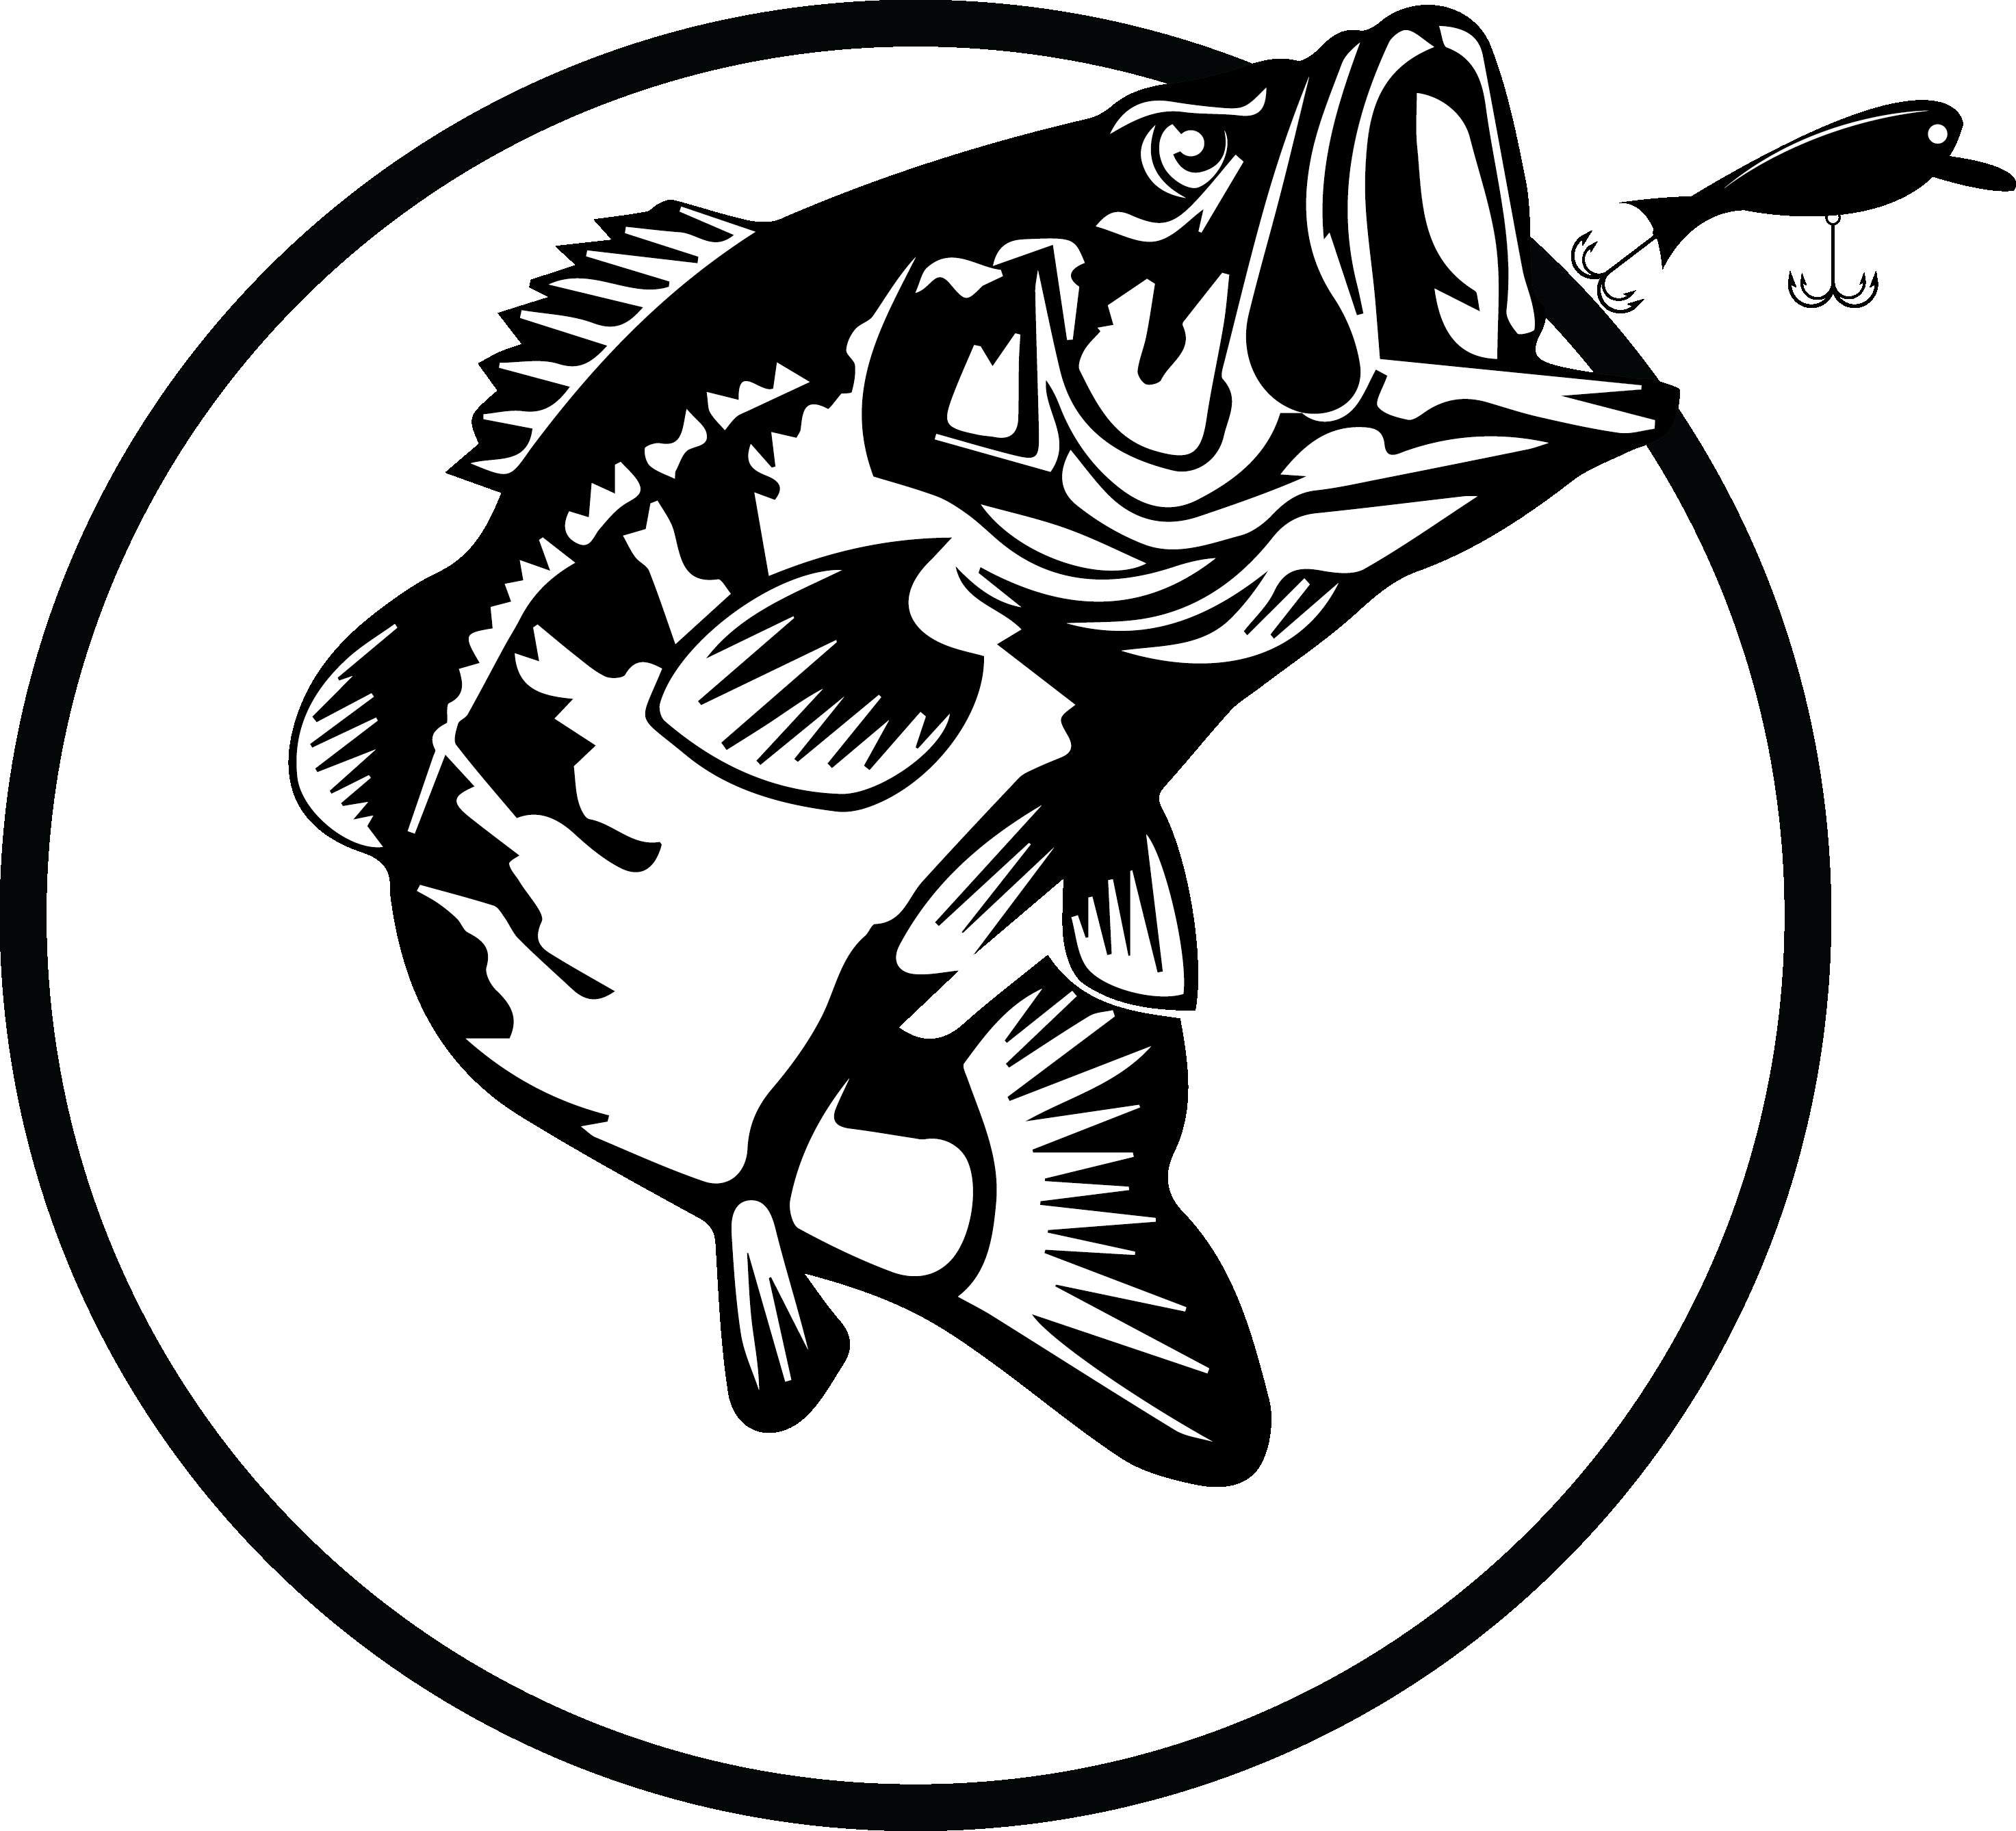 Fishing Pole SVG Designs – MasterBundles